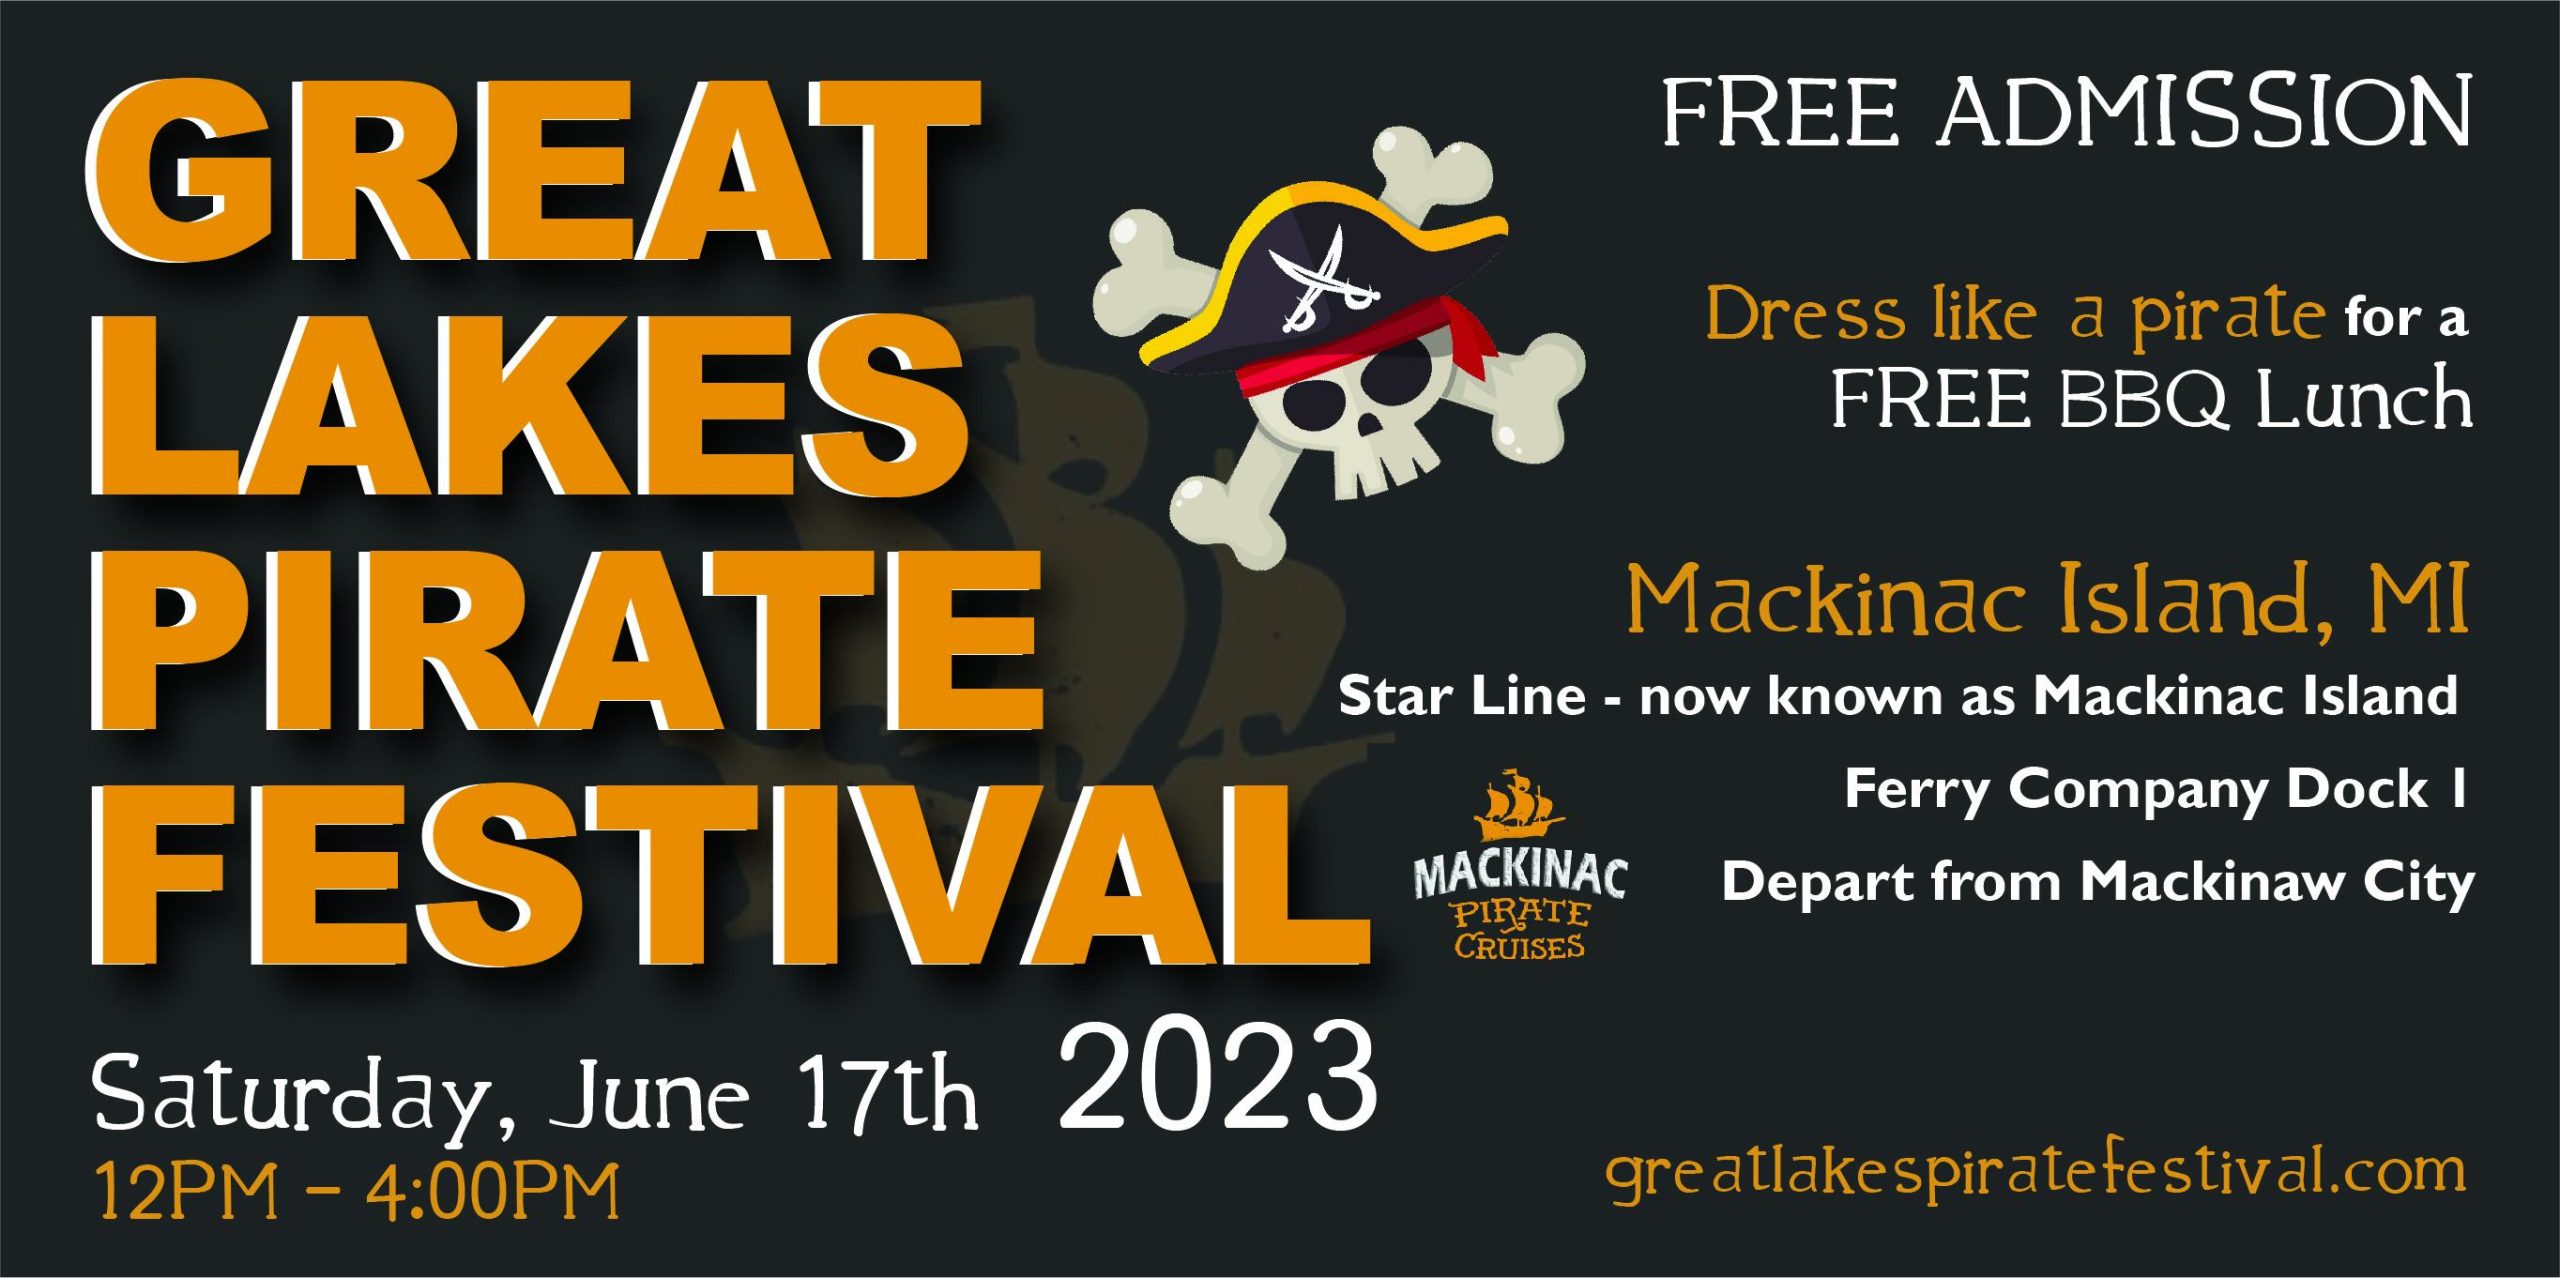 Great Lakes Pirate Festival on Mackinac Island @ Mackinac Island